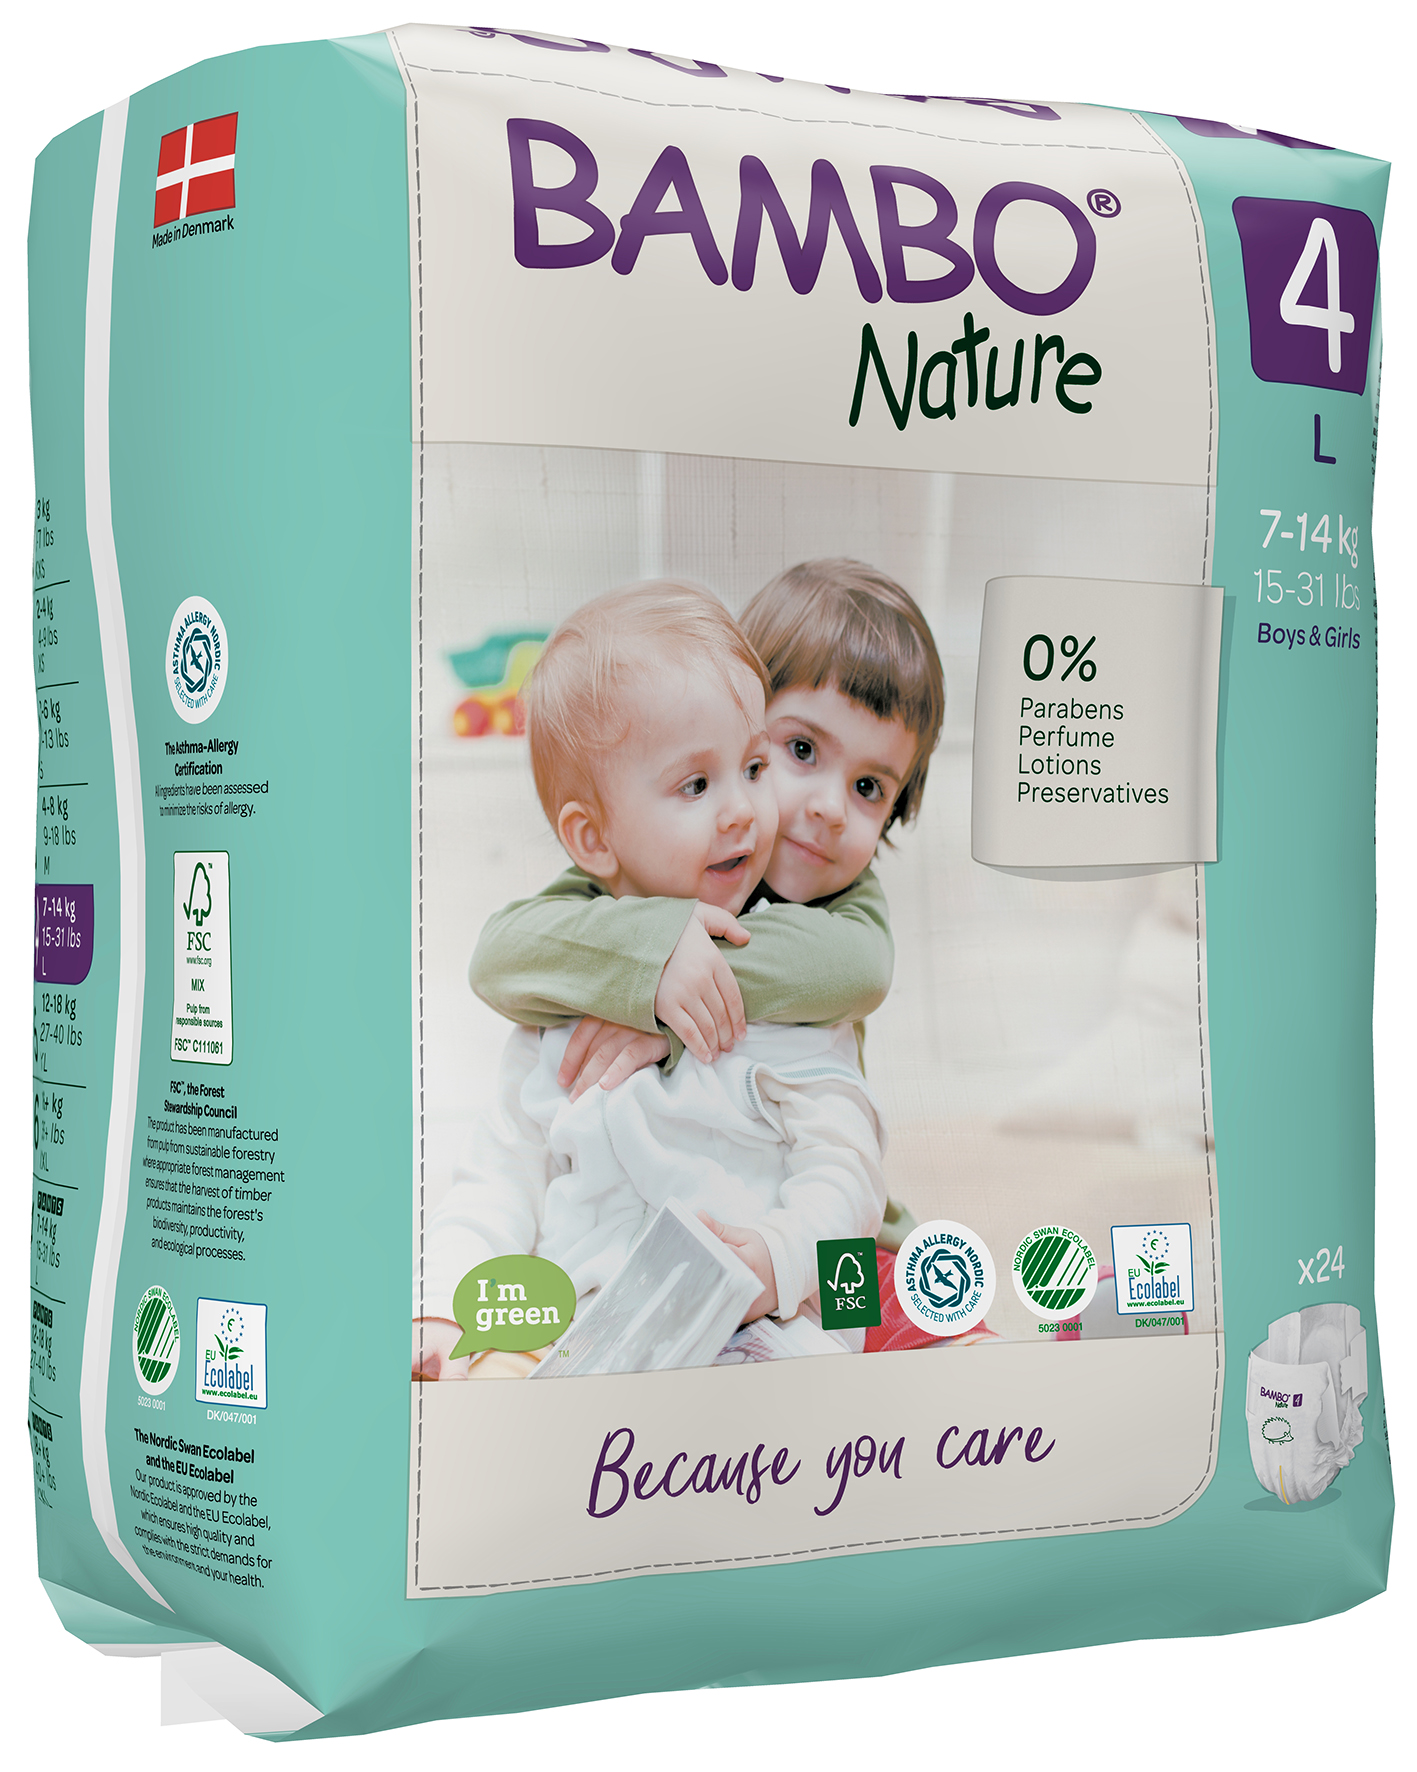 [8556125] Bambo Nature, 7-14 kg, 24/fp